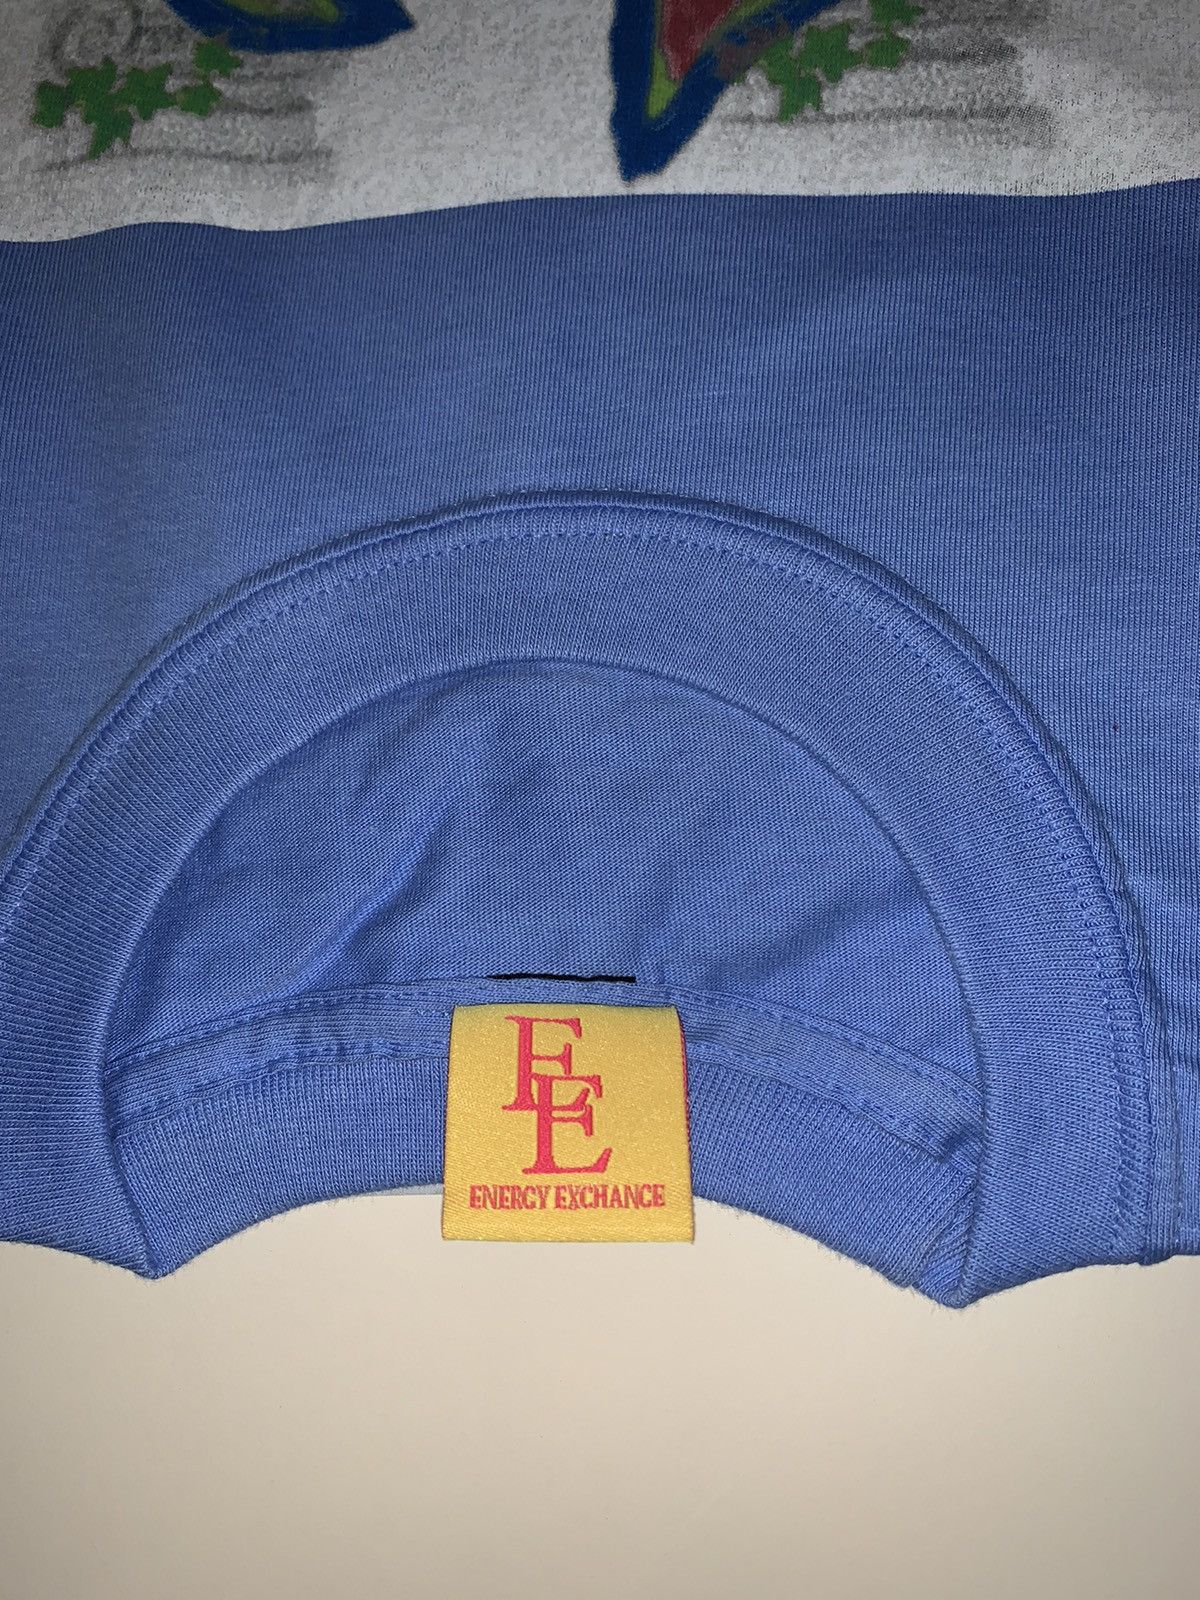 Sad Boys Sbe Merch Bladee Excelsior Temple Sprite T-shirt (Light Blue) Size US S / EU 44-46 / 1 - 3 Preview